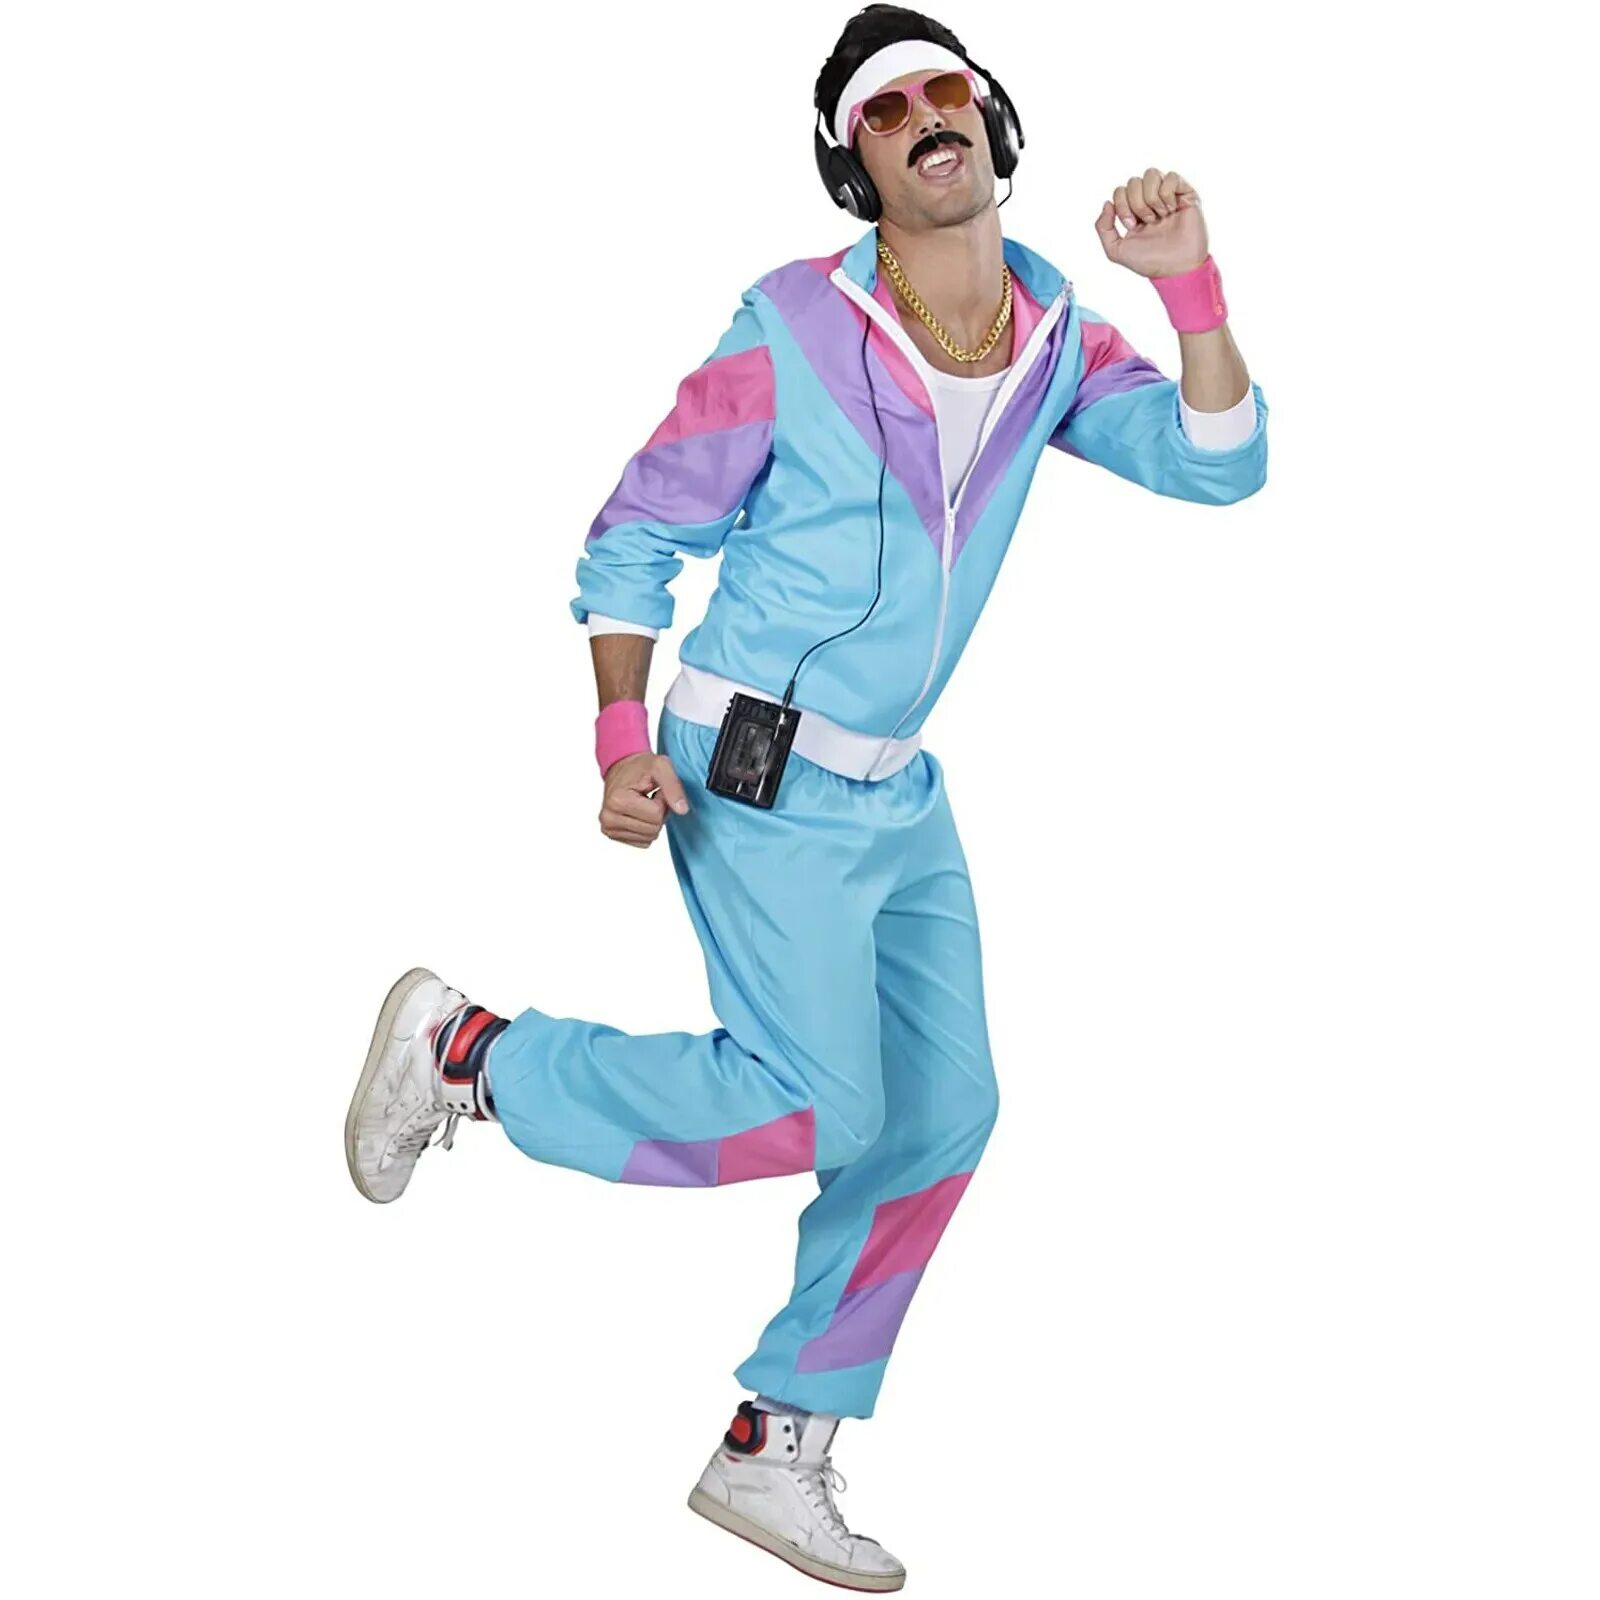 Спортивный костюм 80 90. Костюм 80-х. Спортивный костюм из 80-х. Спортивная одежда в стиле 80-х. Спортивный костюм мужской в стиле 80-х.